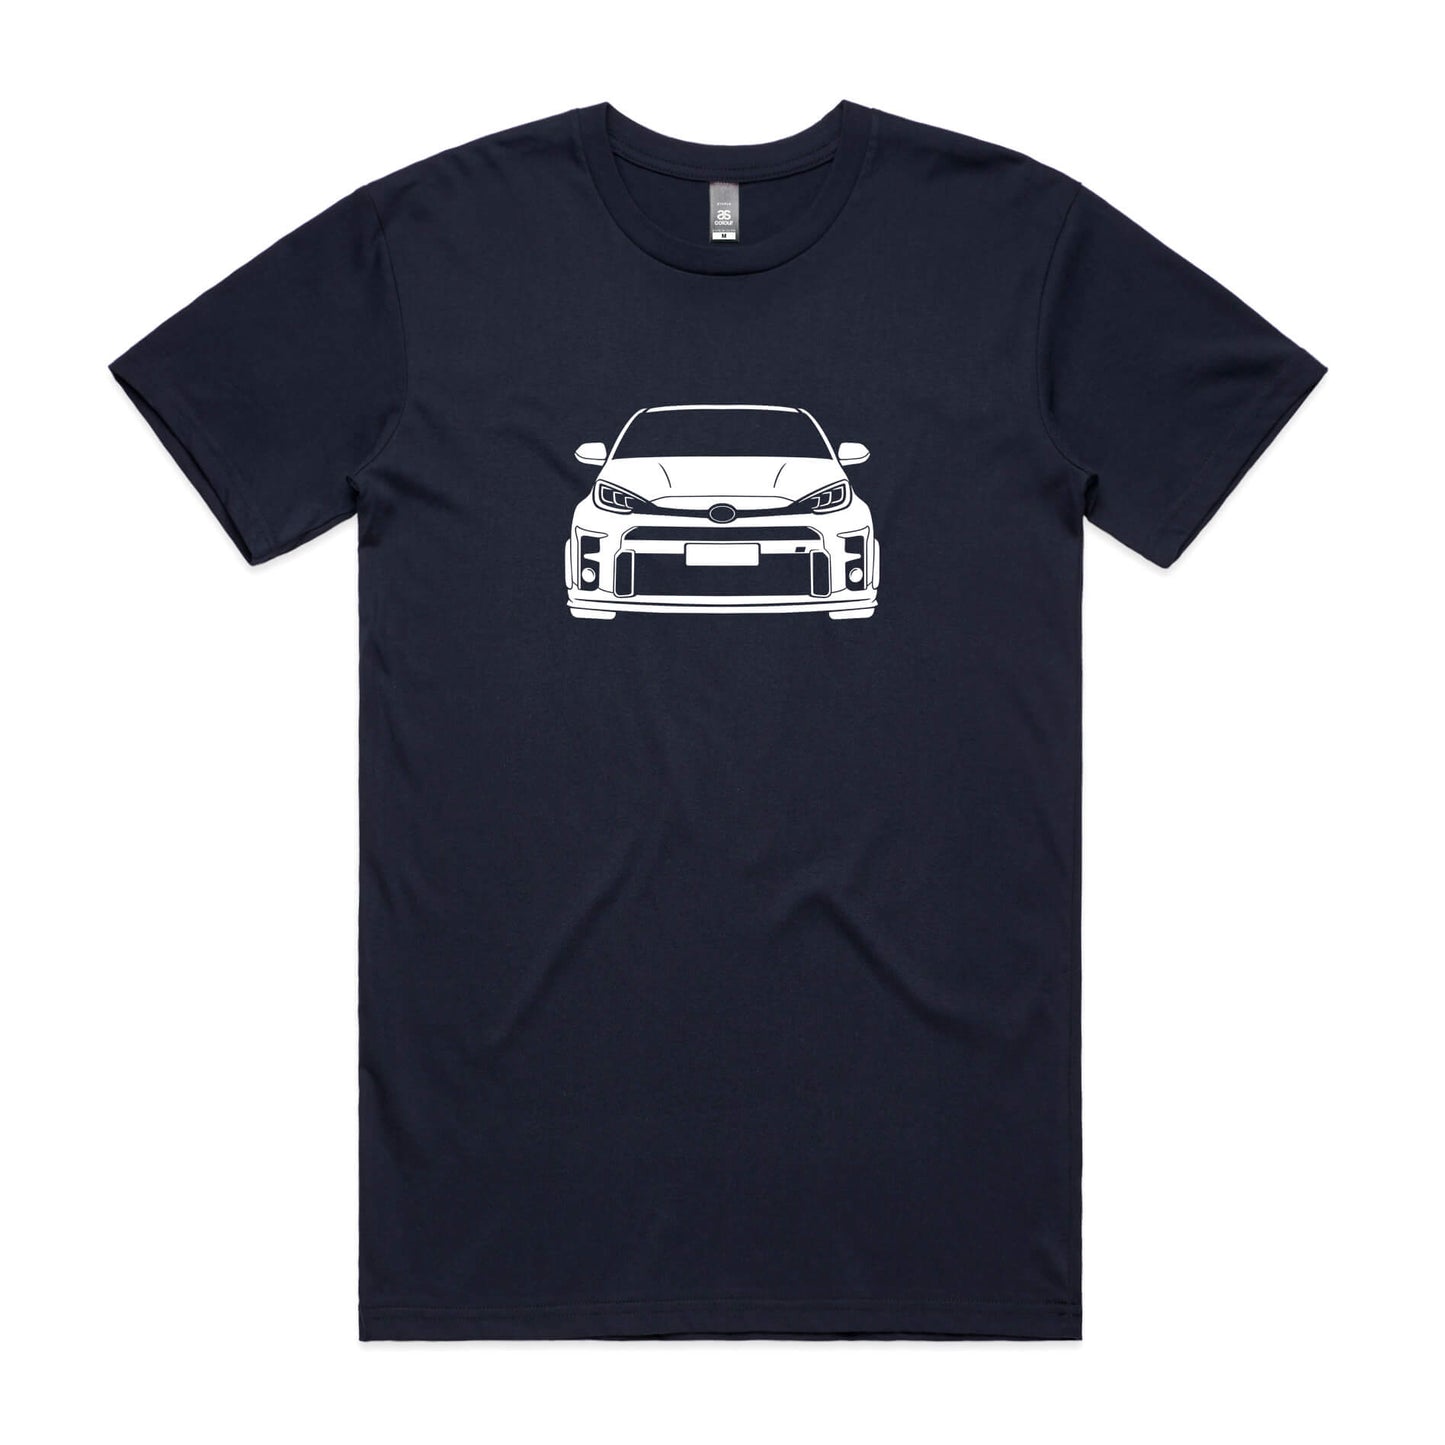 Toyota GR Yaris t-shirt in navy blue